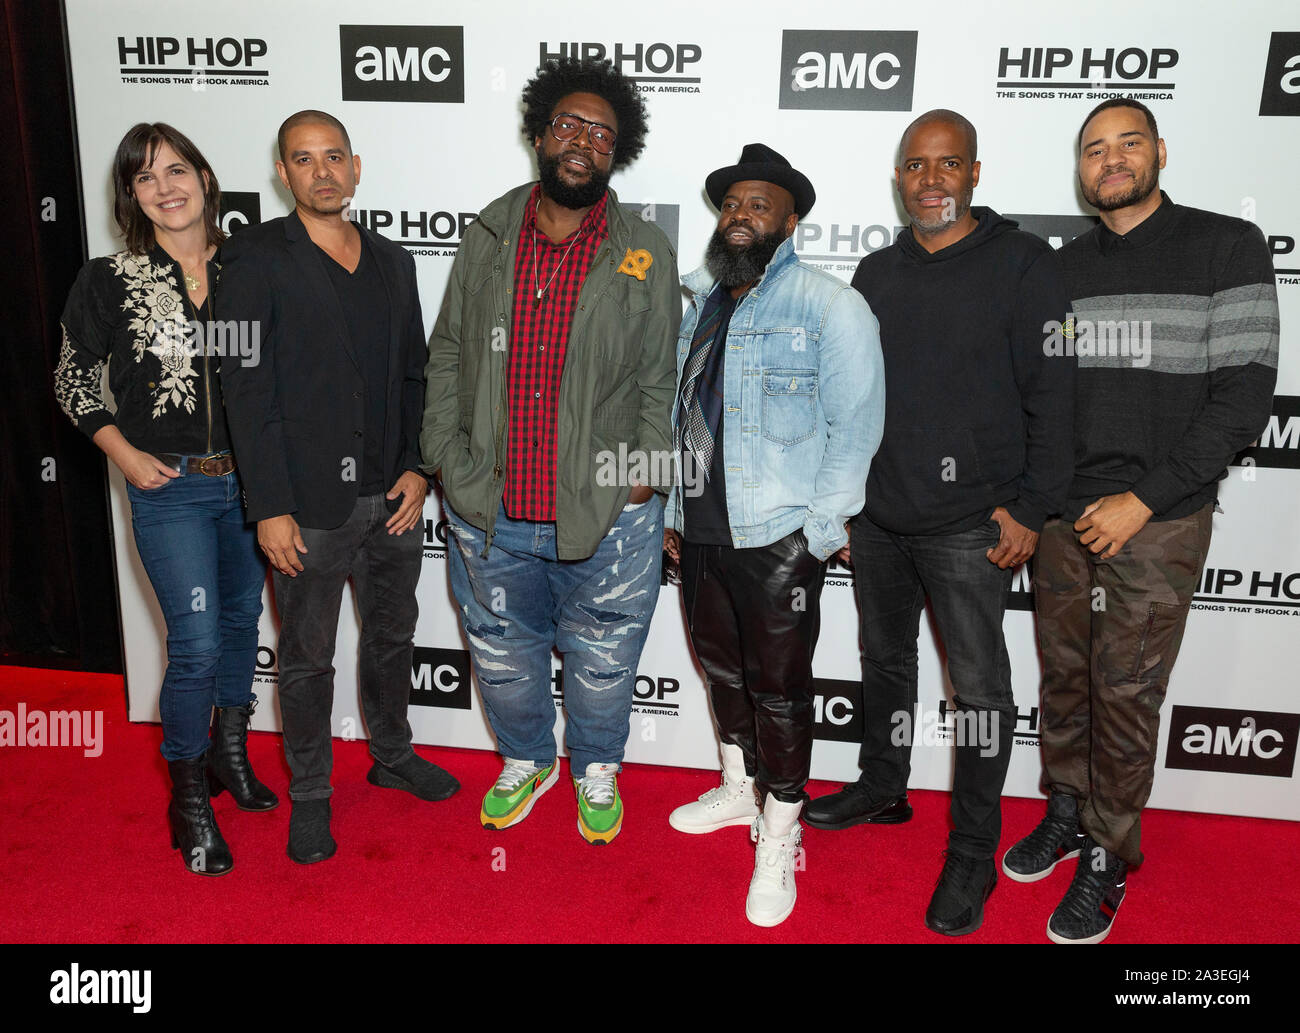 New York, NY - Oktober 7, 2019: Crew sorgt sich AMC feiert Dokumentarfilm Release Hip Hop: Die Songs erschüttert Amerika am Apollo Theater Stockfoto